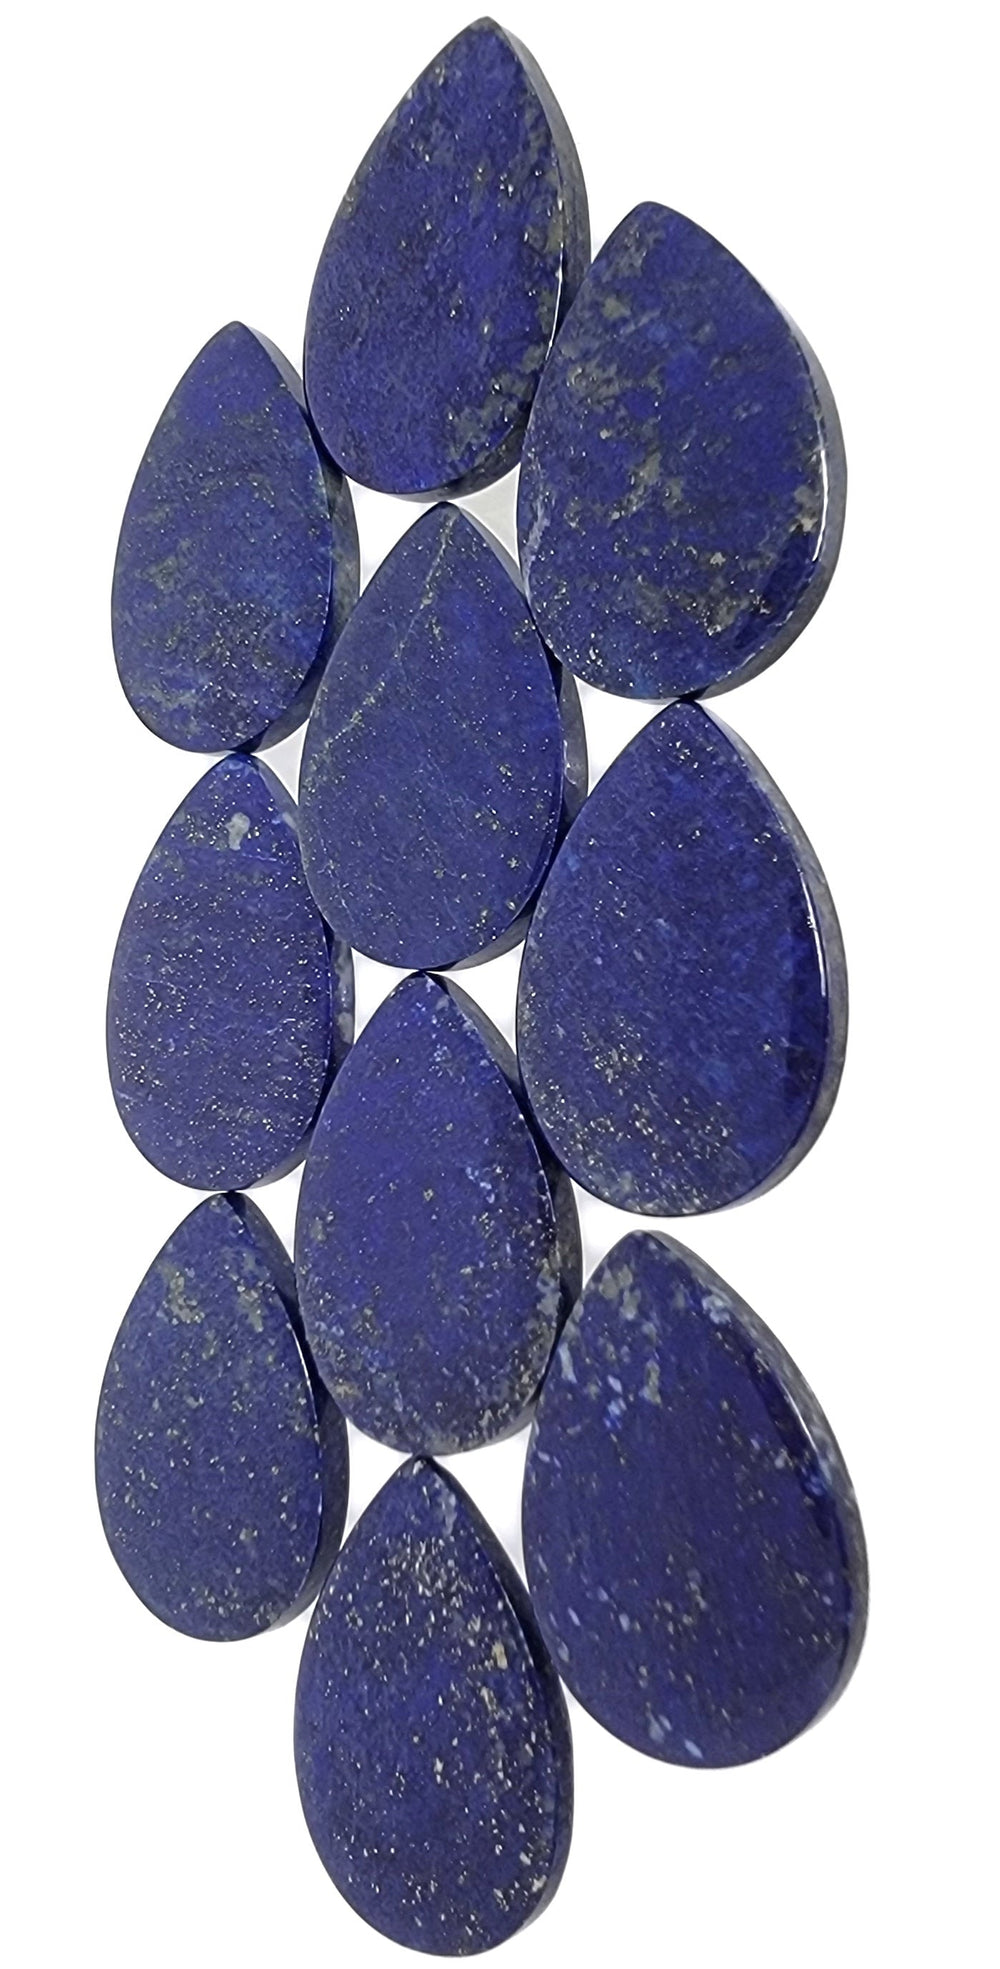 Lapis Lazuli with Pyrite Flecks 18x25mm Teardrop Cabochon 